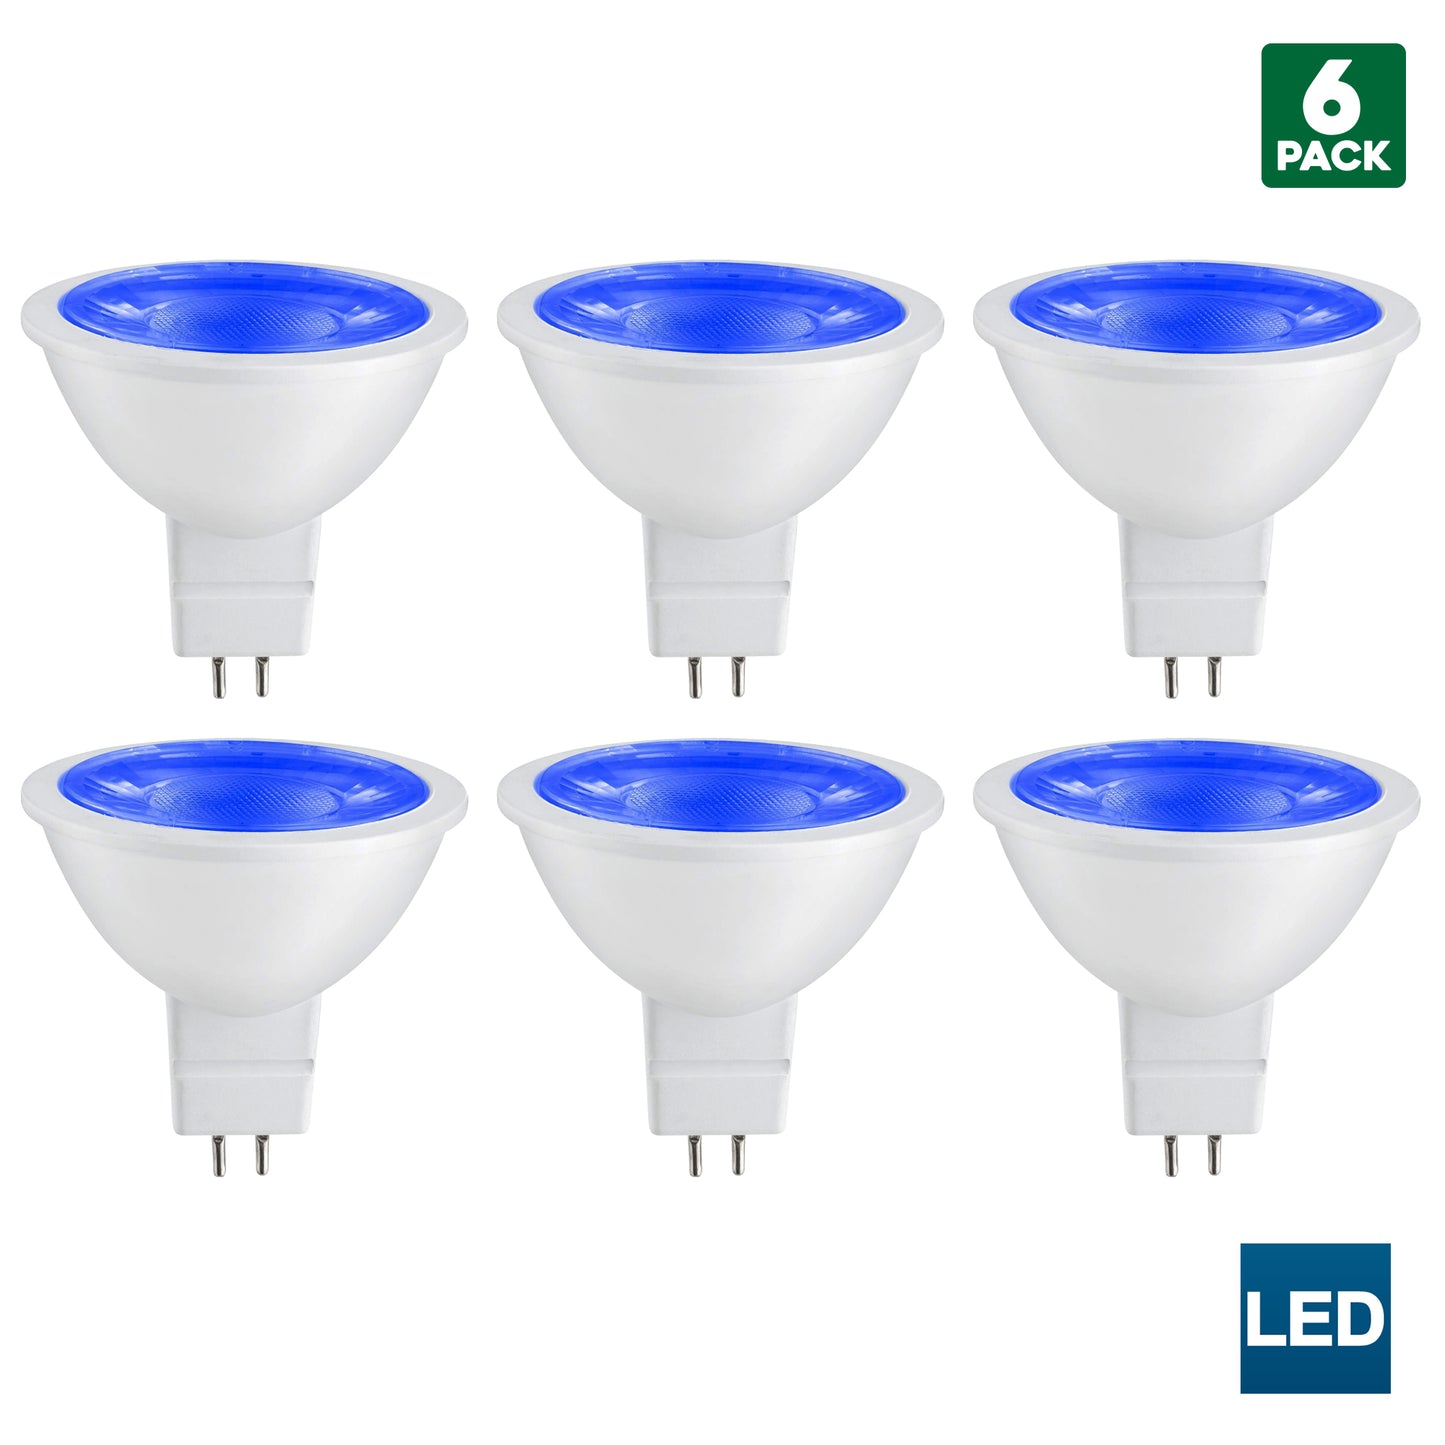 Sunlite MR16 Blue LED Bulb, 12 Volt, 3 Watt, 90 Lumens, GU5.3 Base, 30,000 Hour Long Life, 25W Equivalent, Energy Saving, Cool Touch